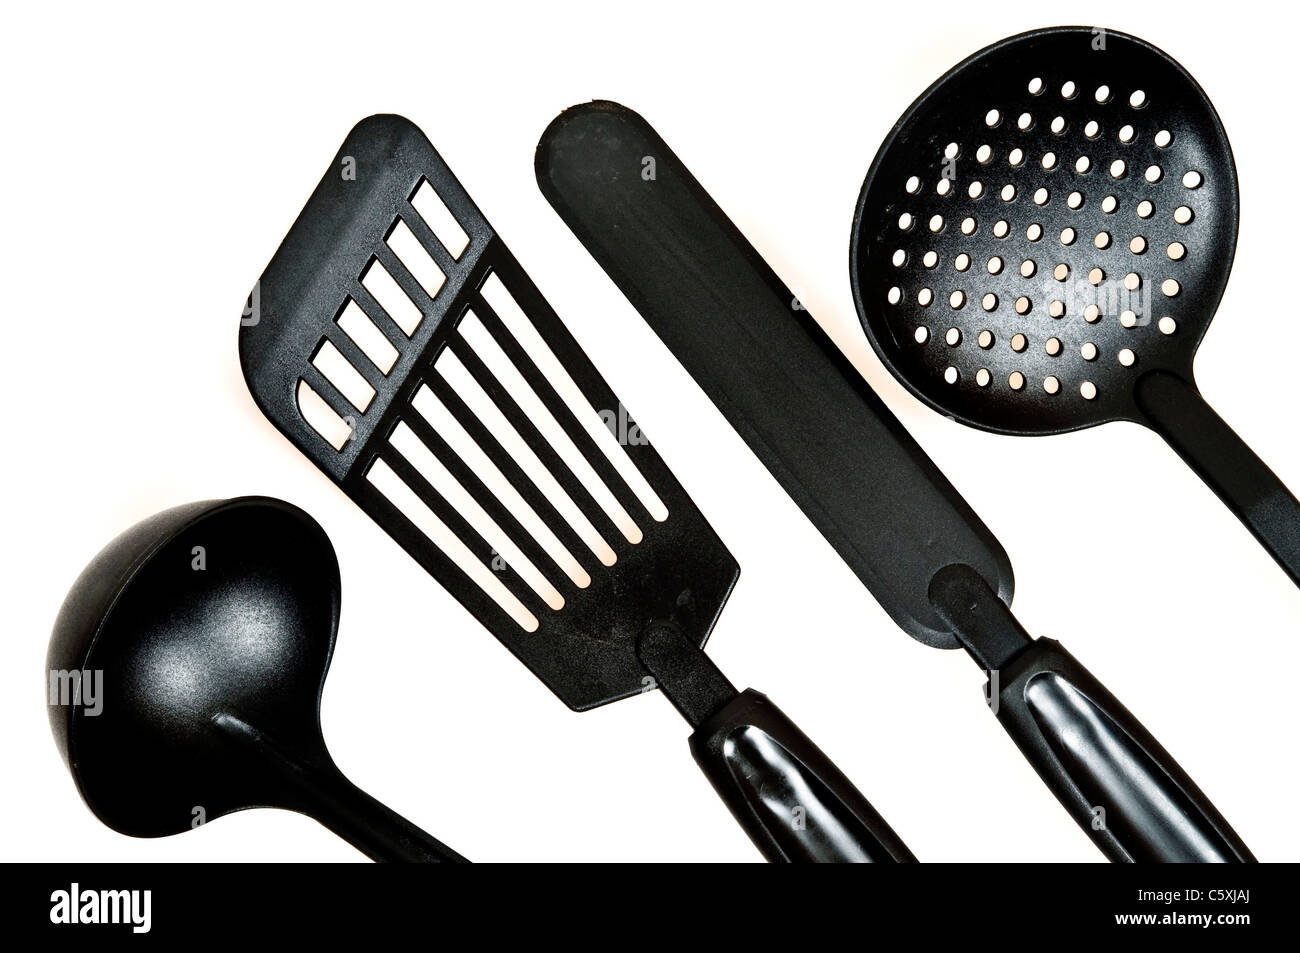 Isolated group of kitchen utensils Stock Photo